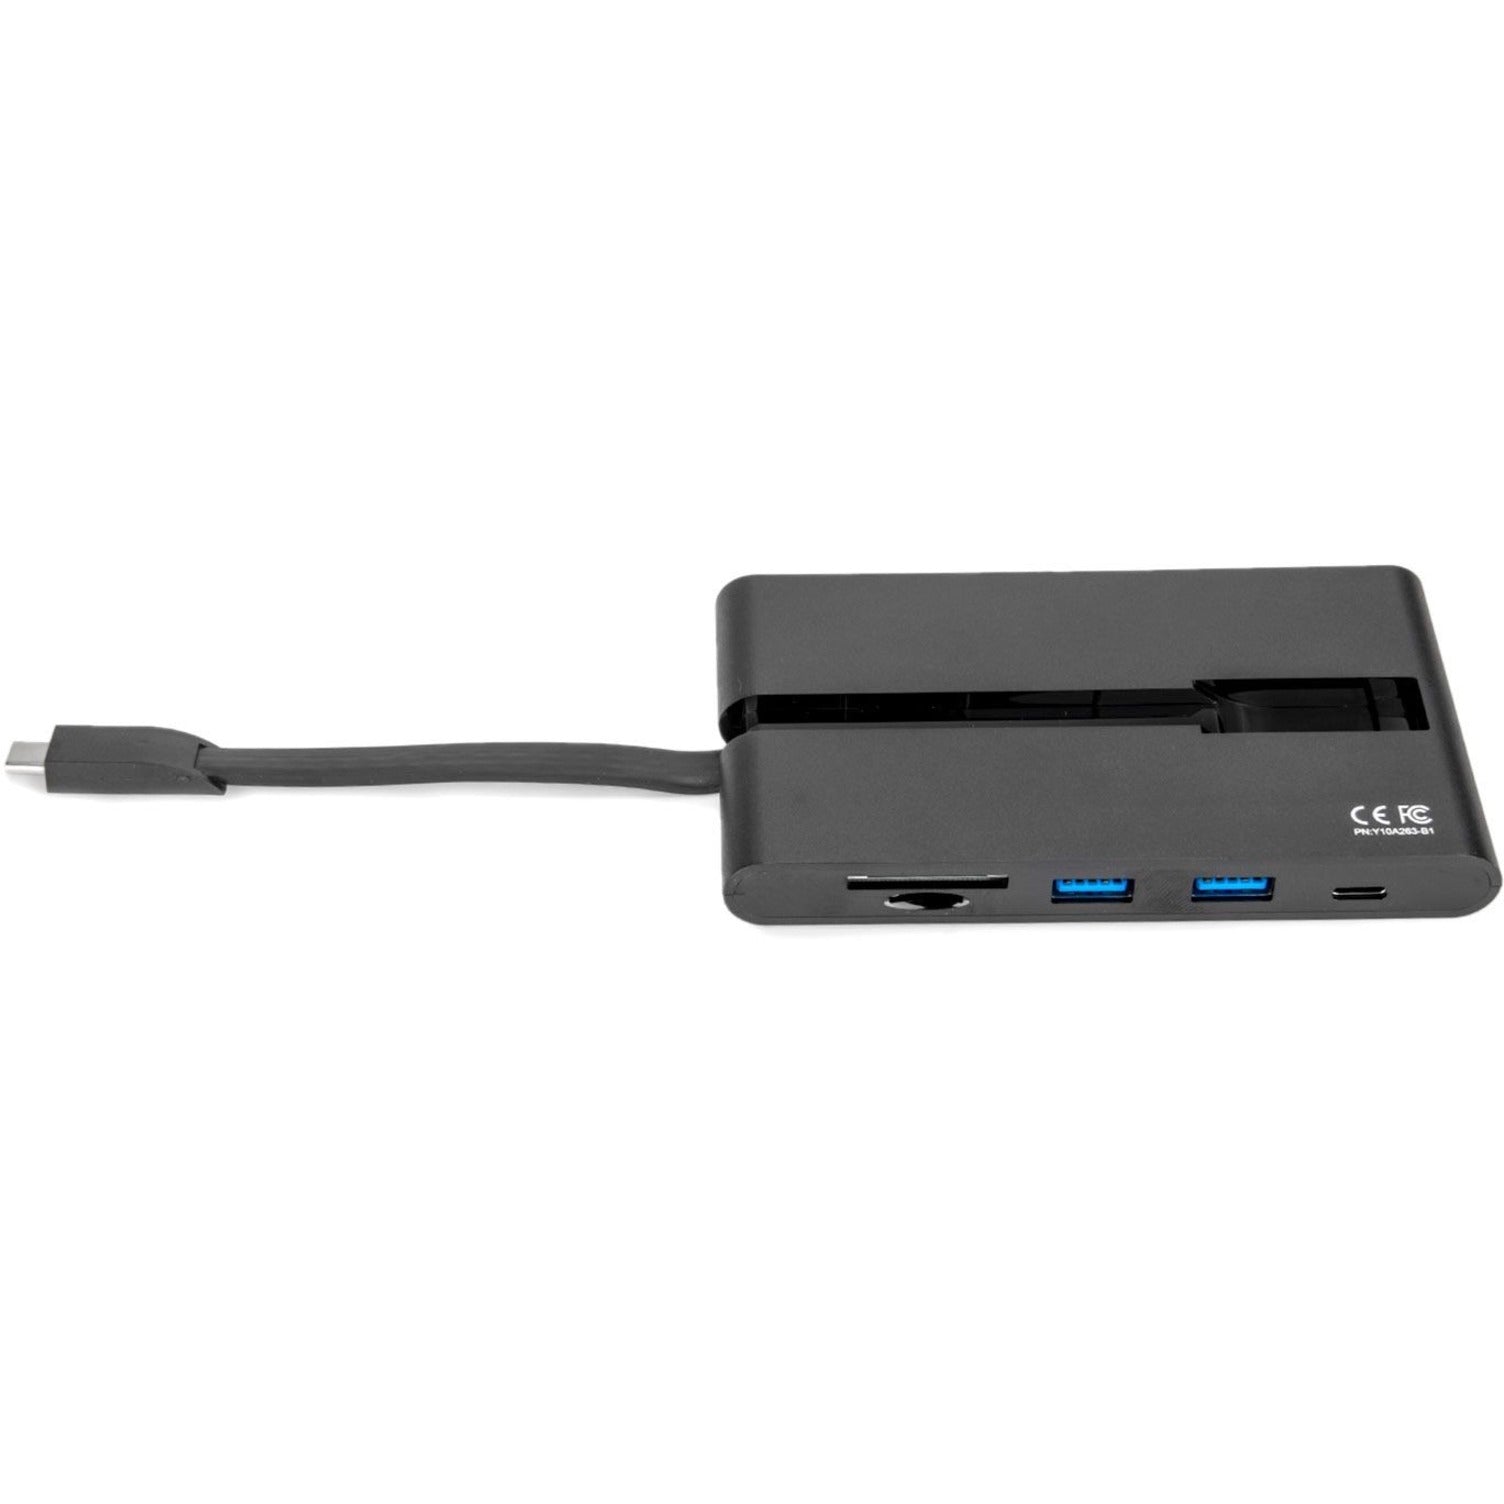 Rocstor Y10A263-B1 Tragbarer USB-C Multiport Adapter mit HDMI VGA USB 3.0 SD & MICRO SD